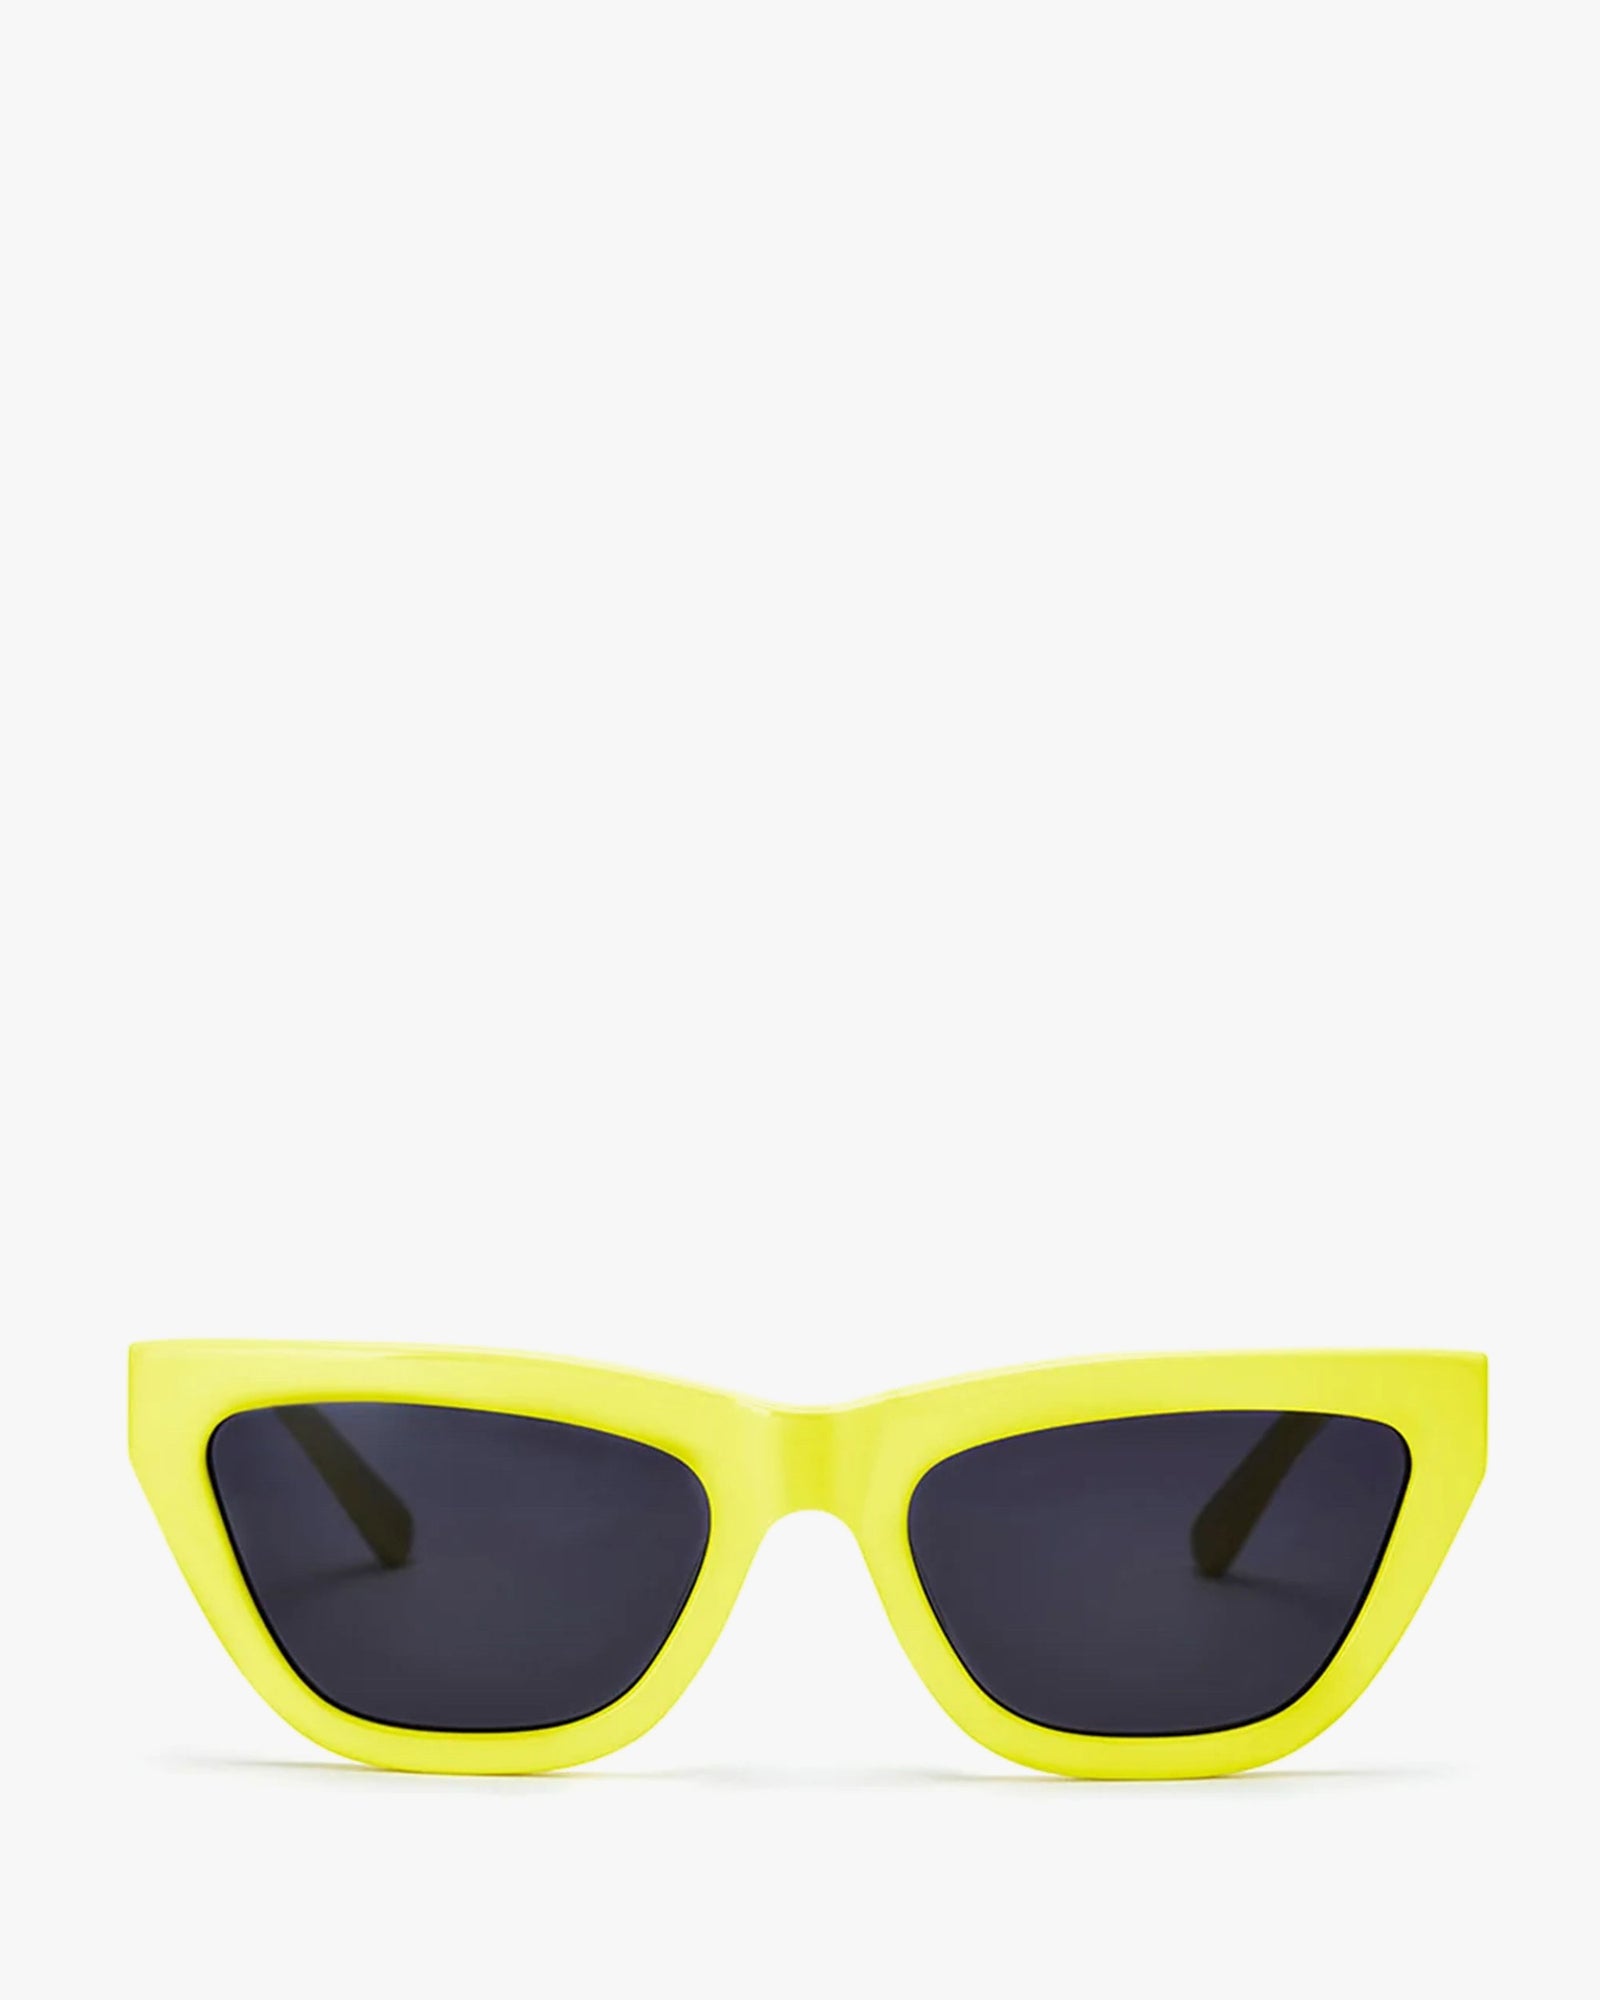 JB Sun The Cateye Sunglasses in lemon